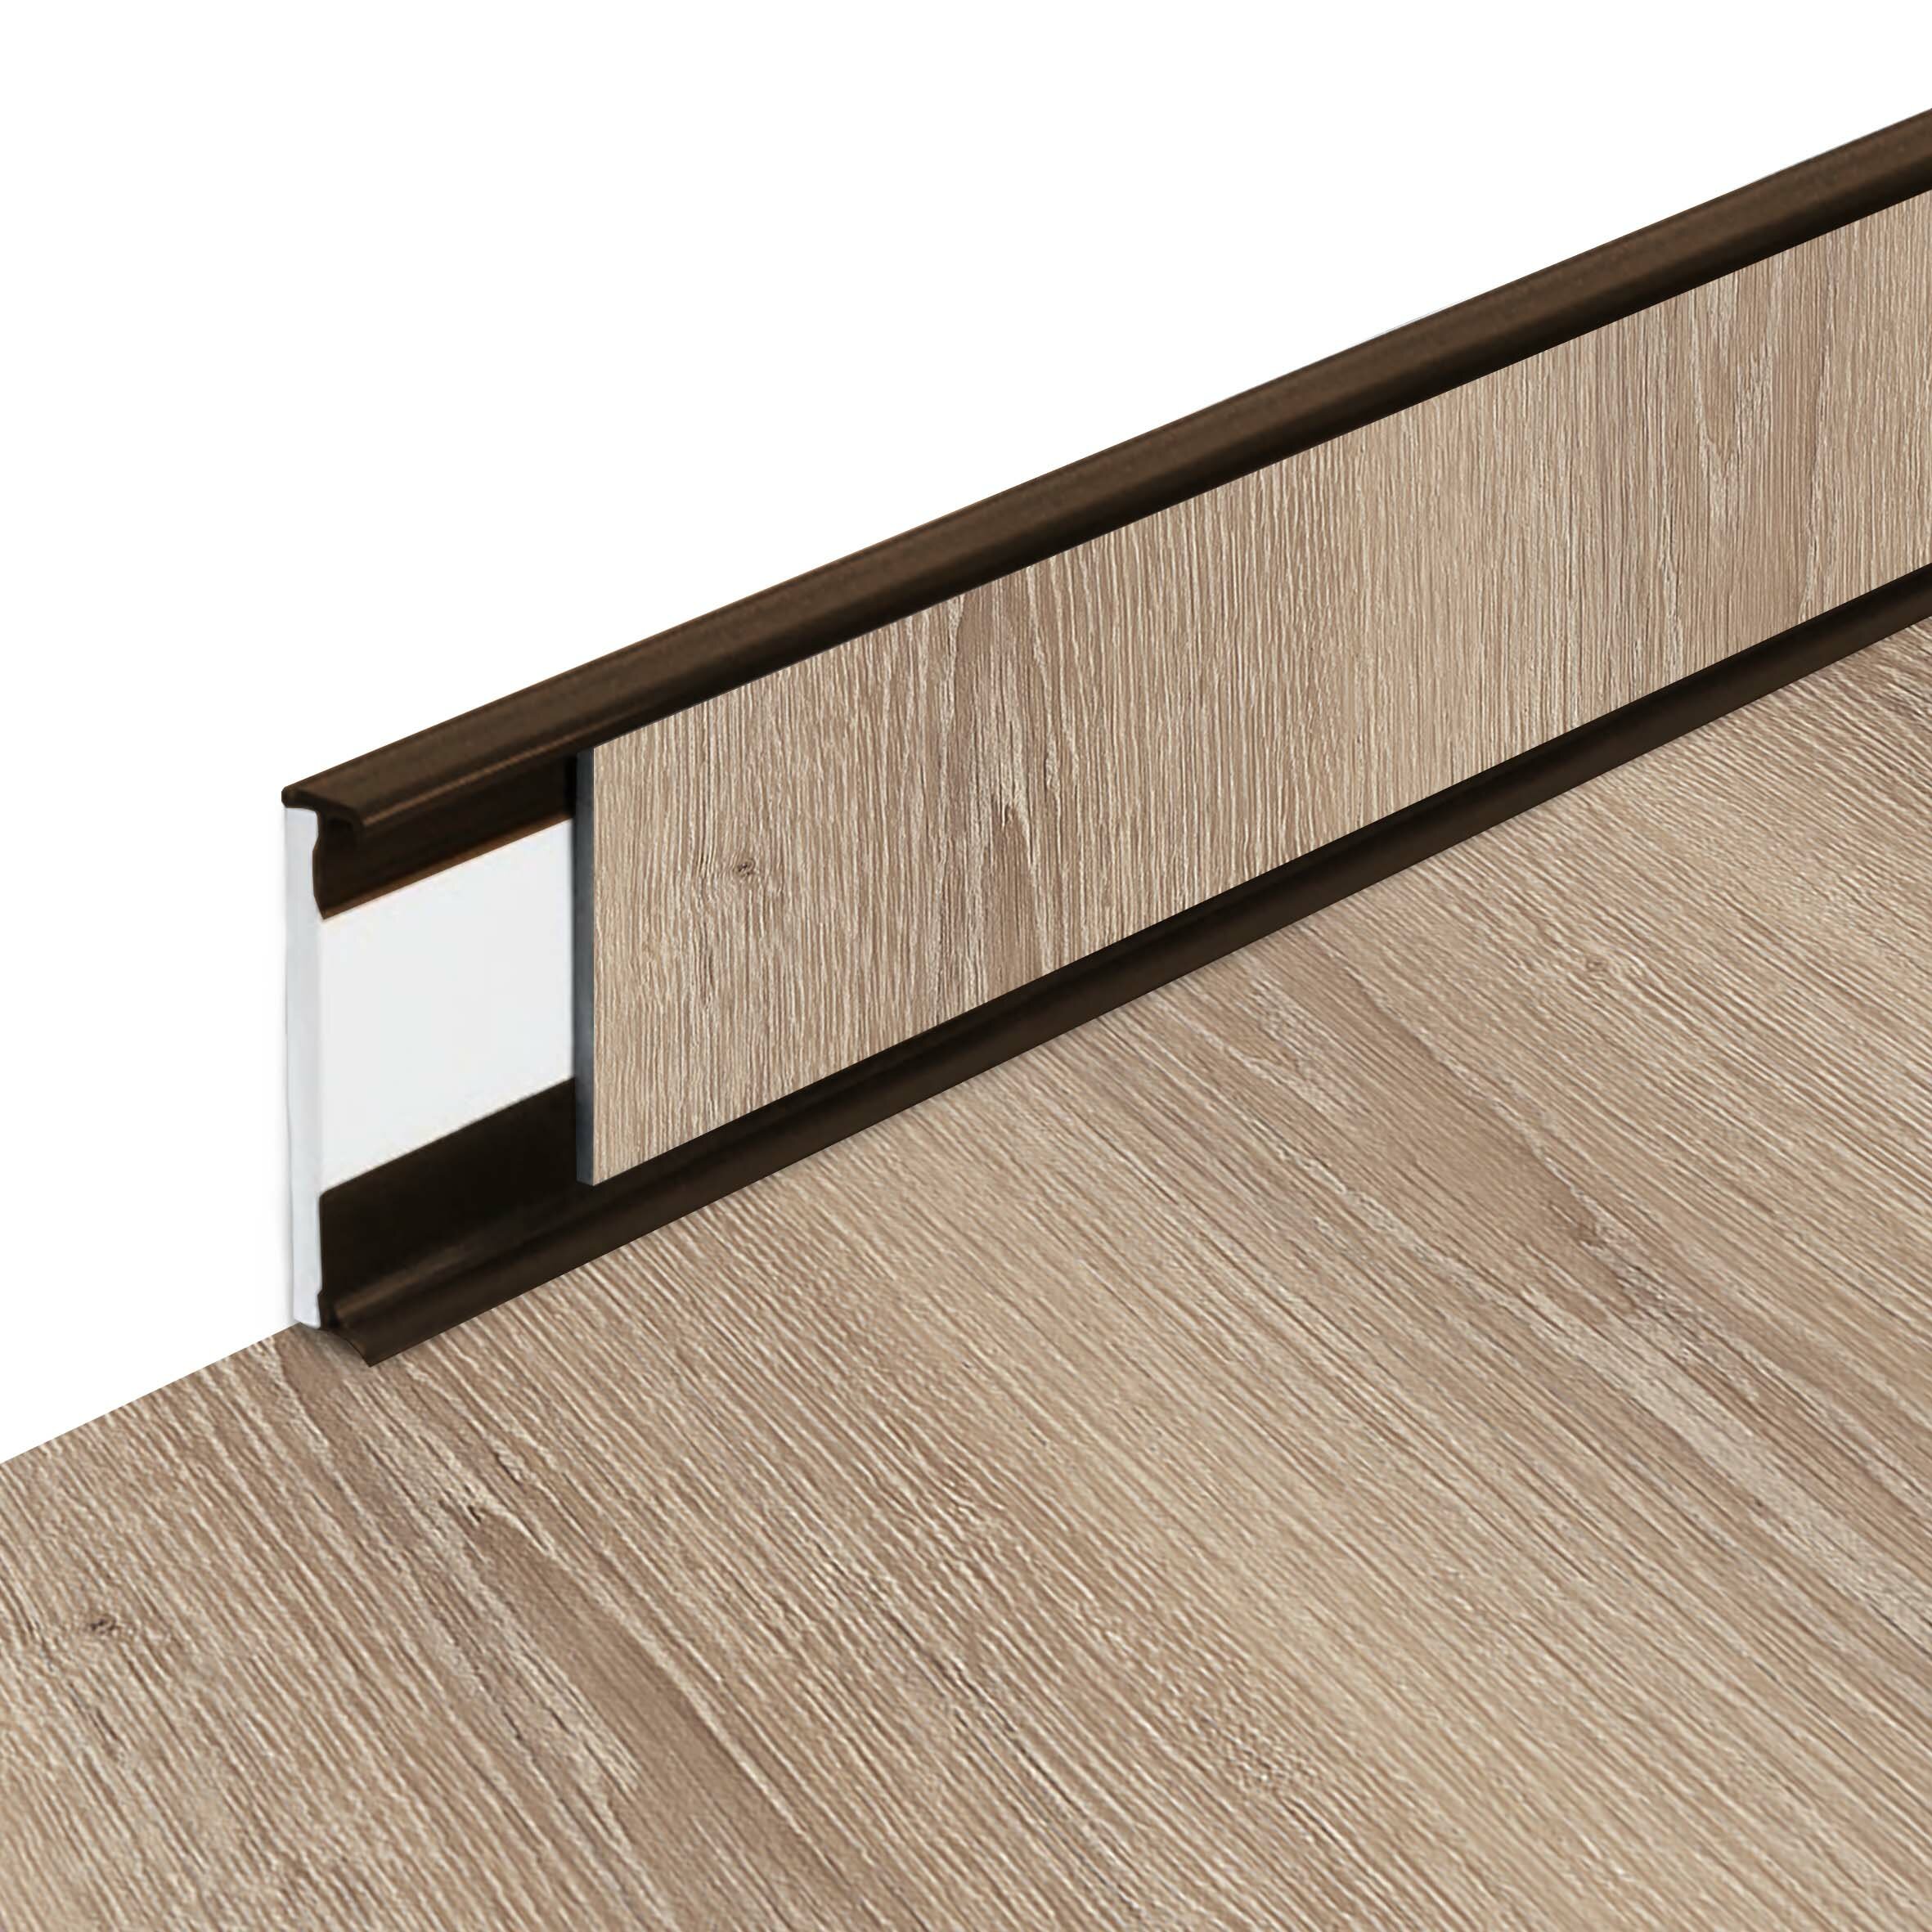 PVC vinylová soklová podlahová lišta Fortelock Business Tyrolean oak W001 Brown - dĺžka 200 cm, výška 5,8 cm, hrúbka 1,2 cm